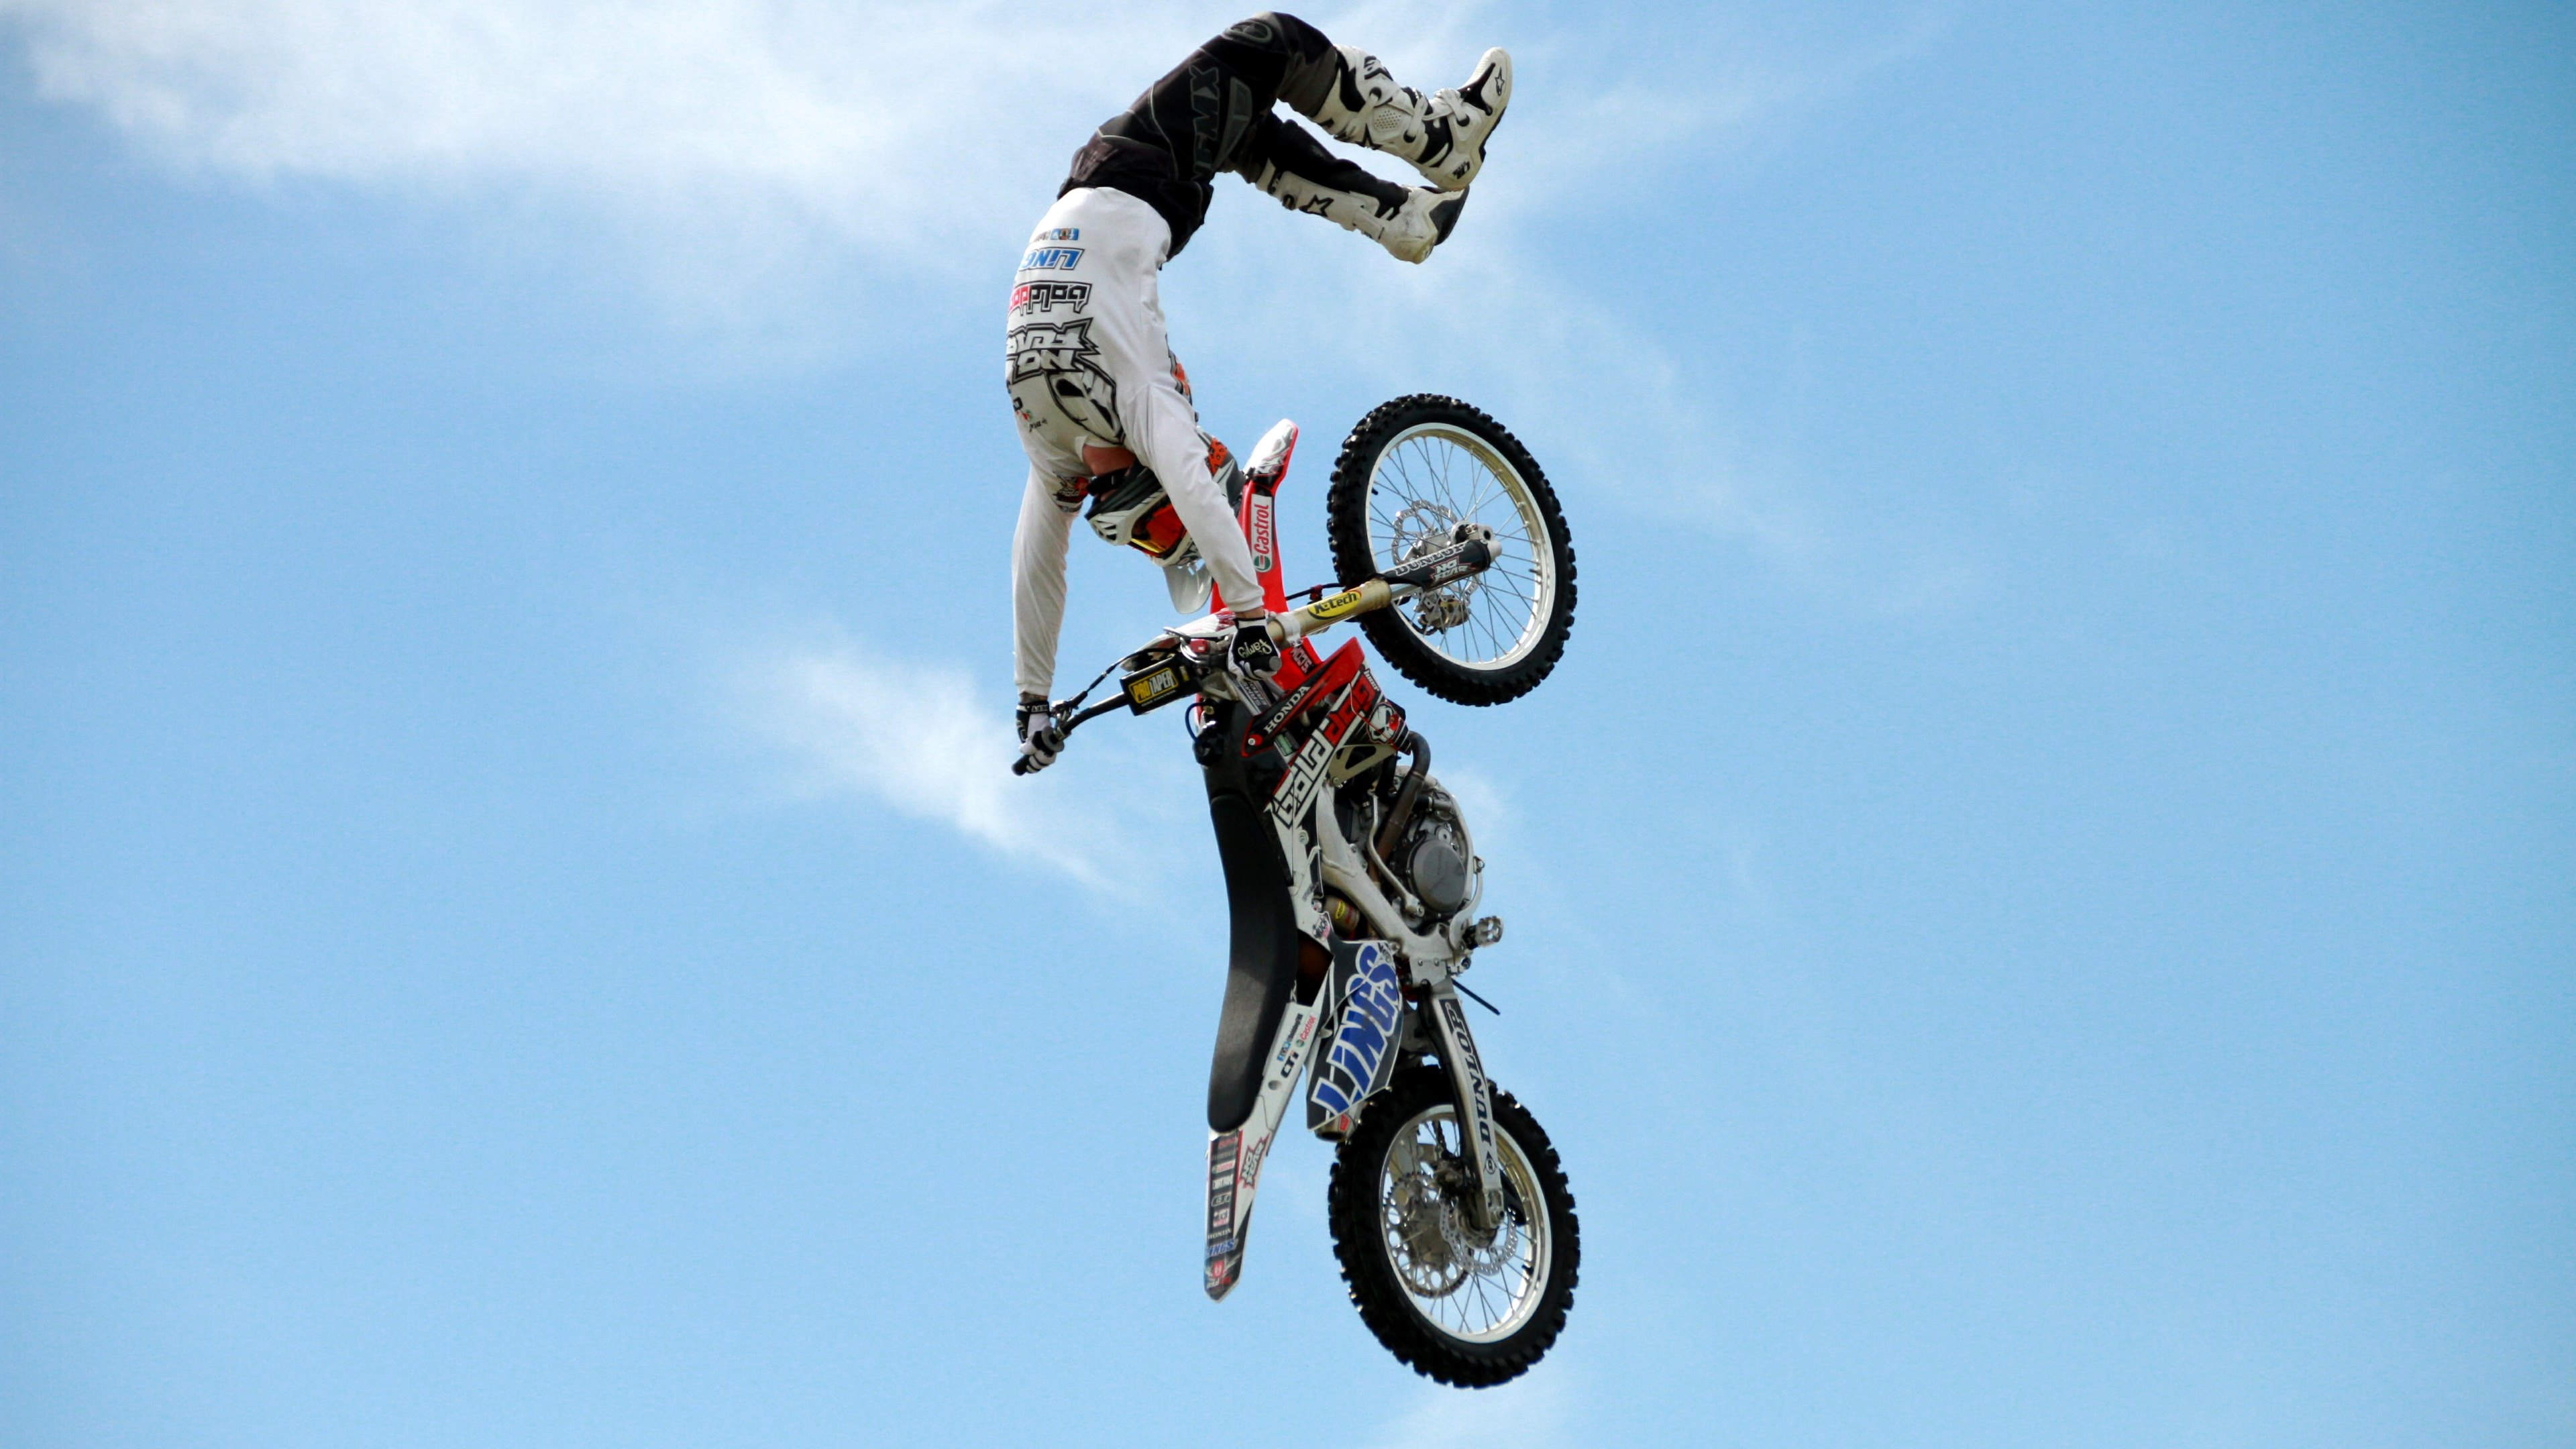 721354 Bild herunterladen fahrrad, sport, moto cross, akrobatik, honda - Hintergrundbilder und Bildschirmschoner kostenlos